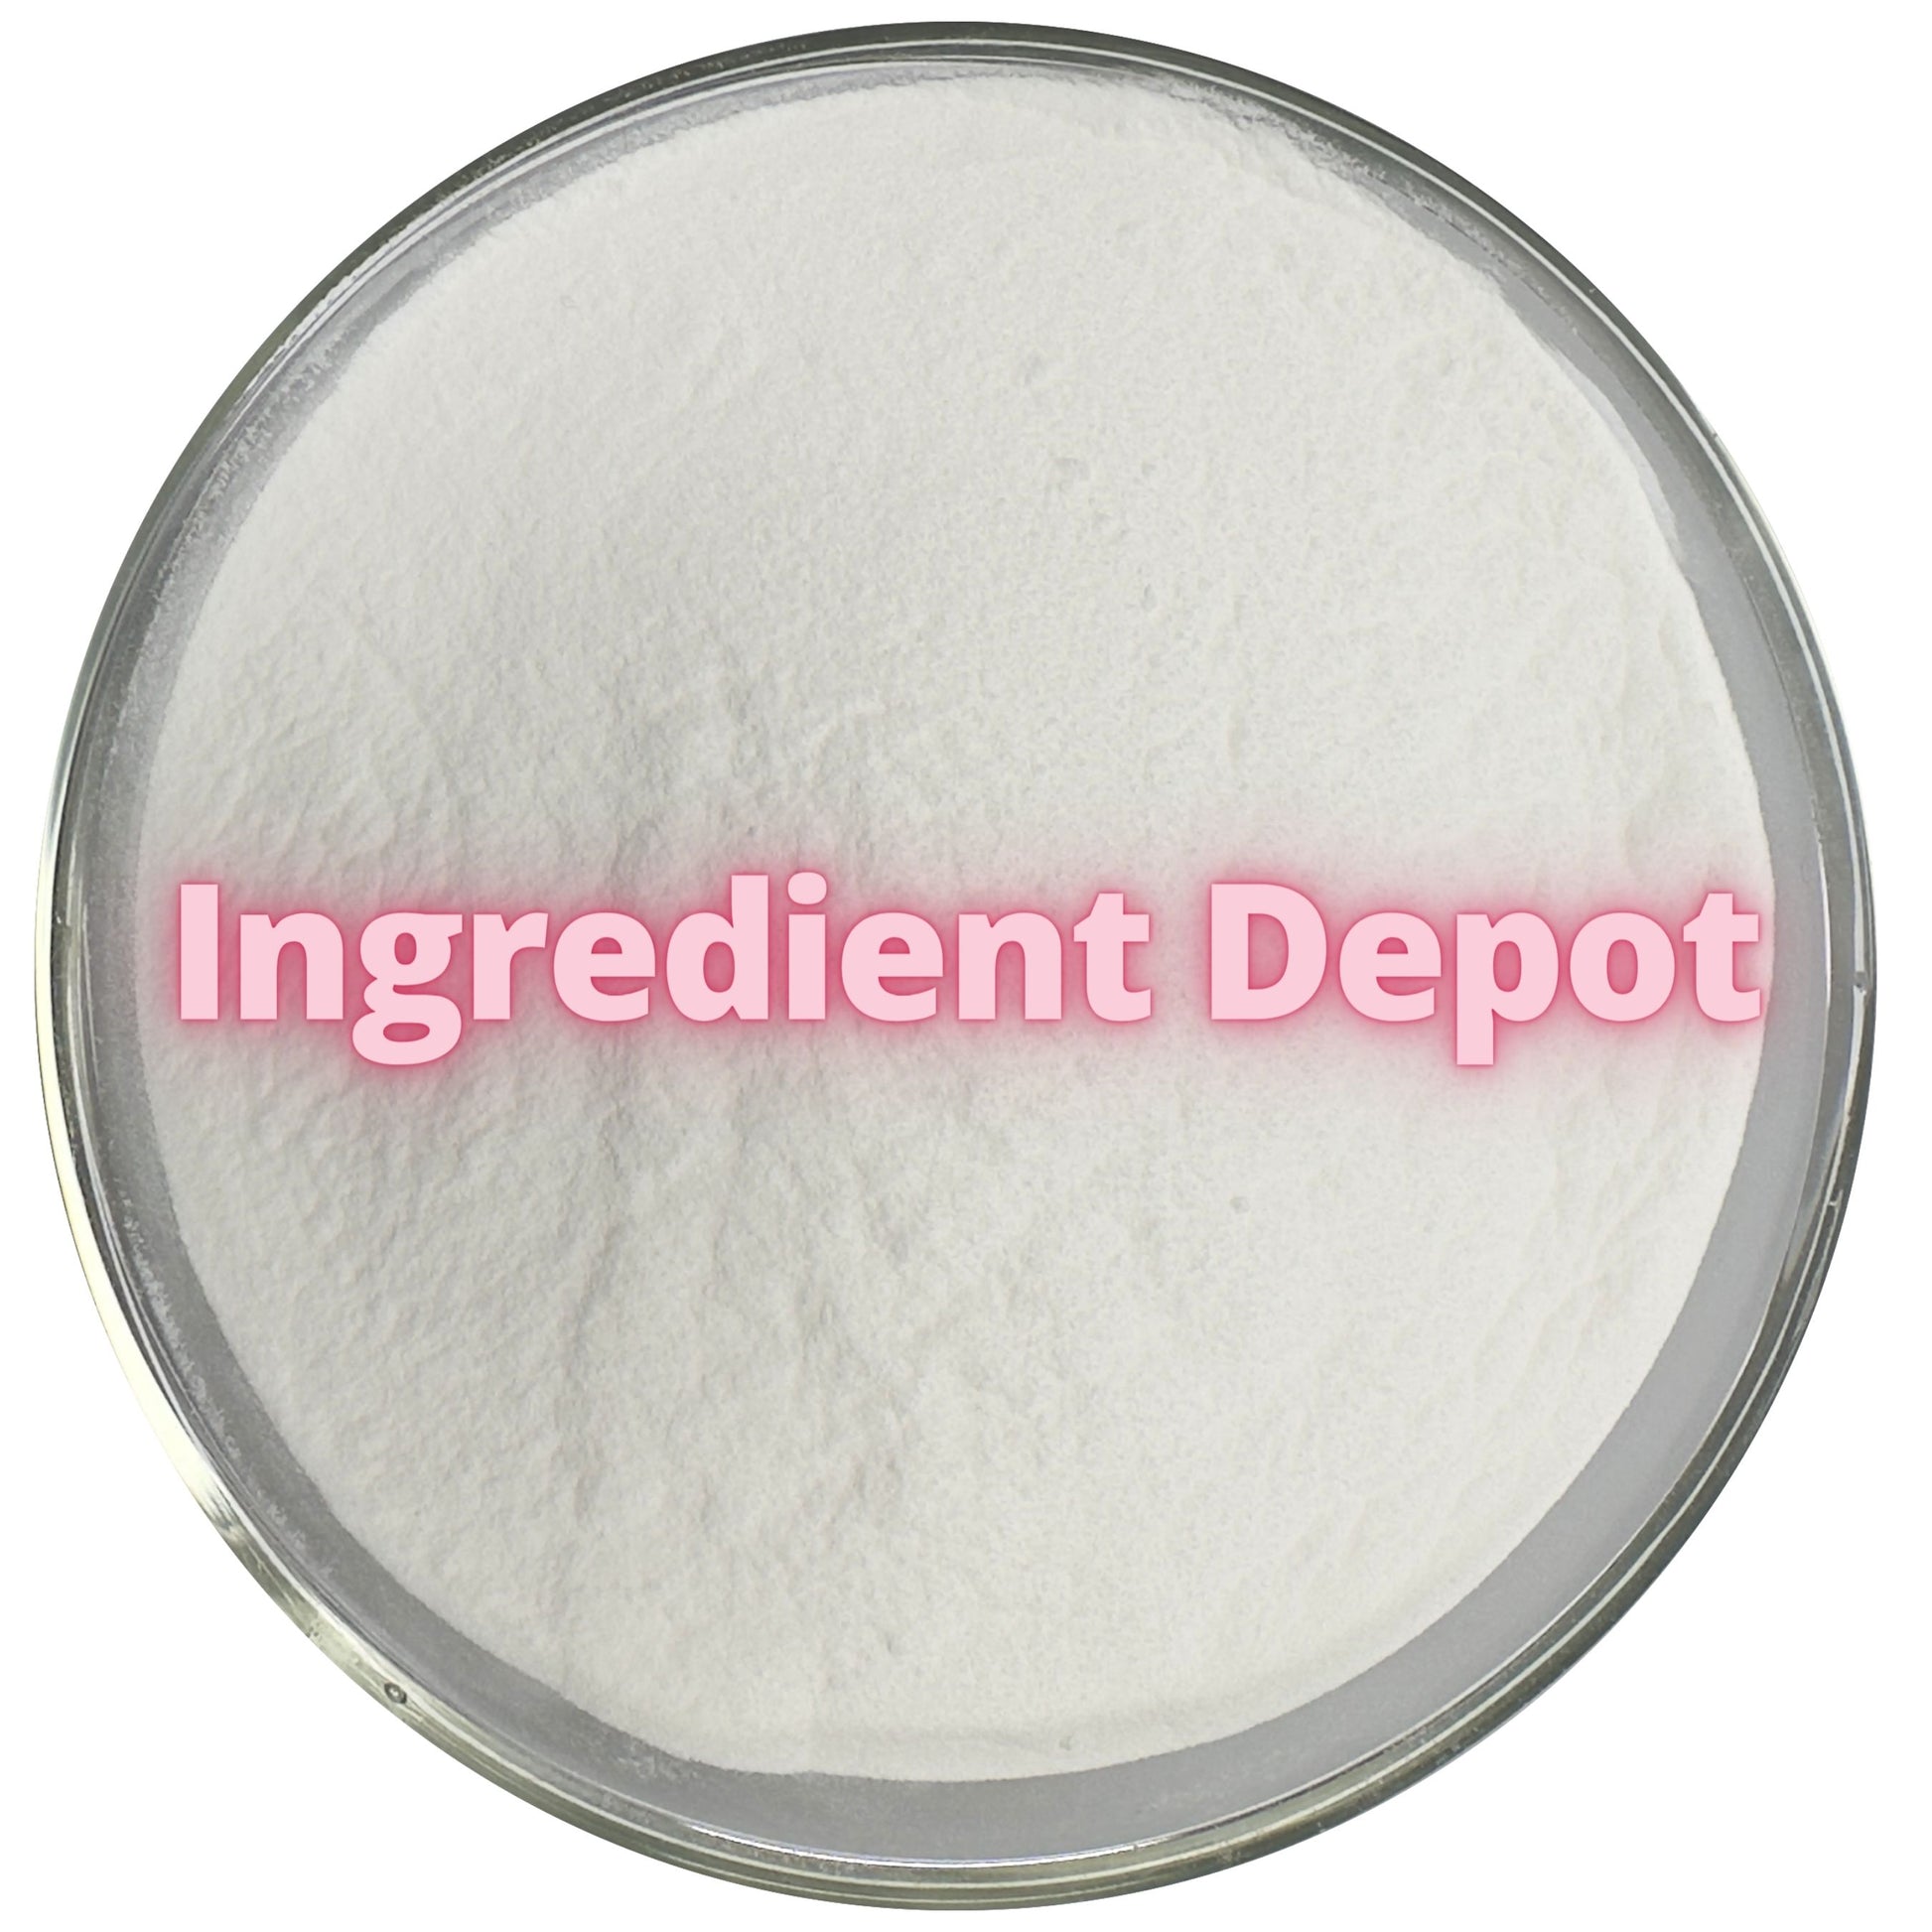 SMCC 90 Silicified Microcrystalline Cellulose - USP/NF Grade 1 kg - Ingredient Depot